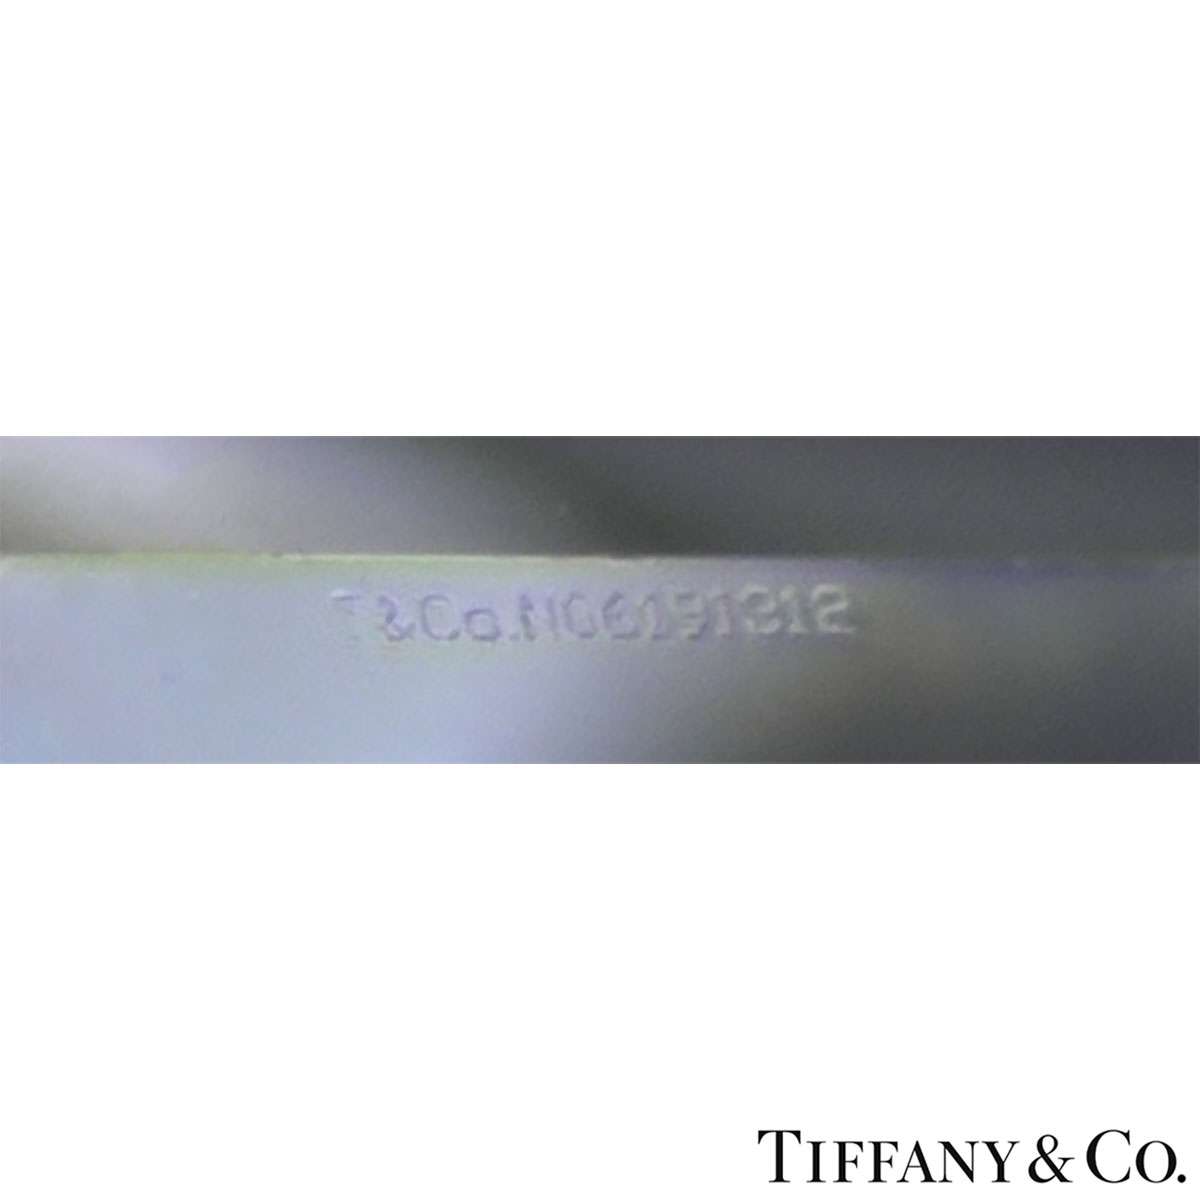 Tiffany & Co. Diamond Earrings 2.43ct TDW